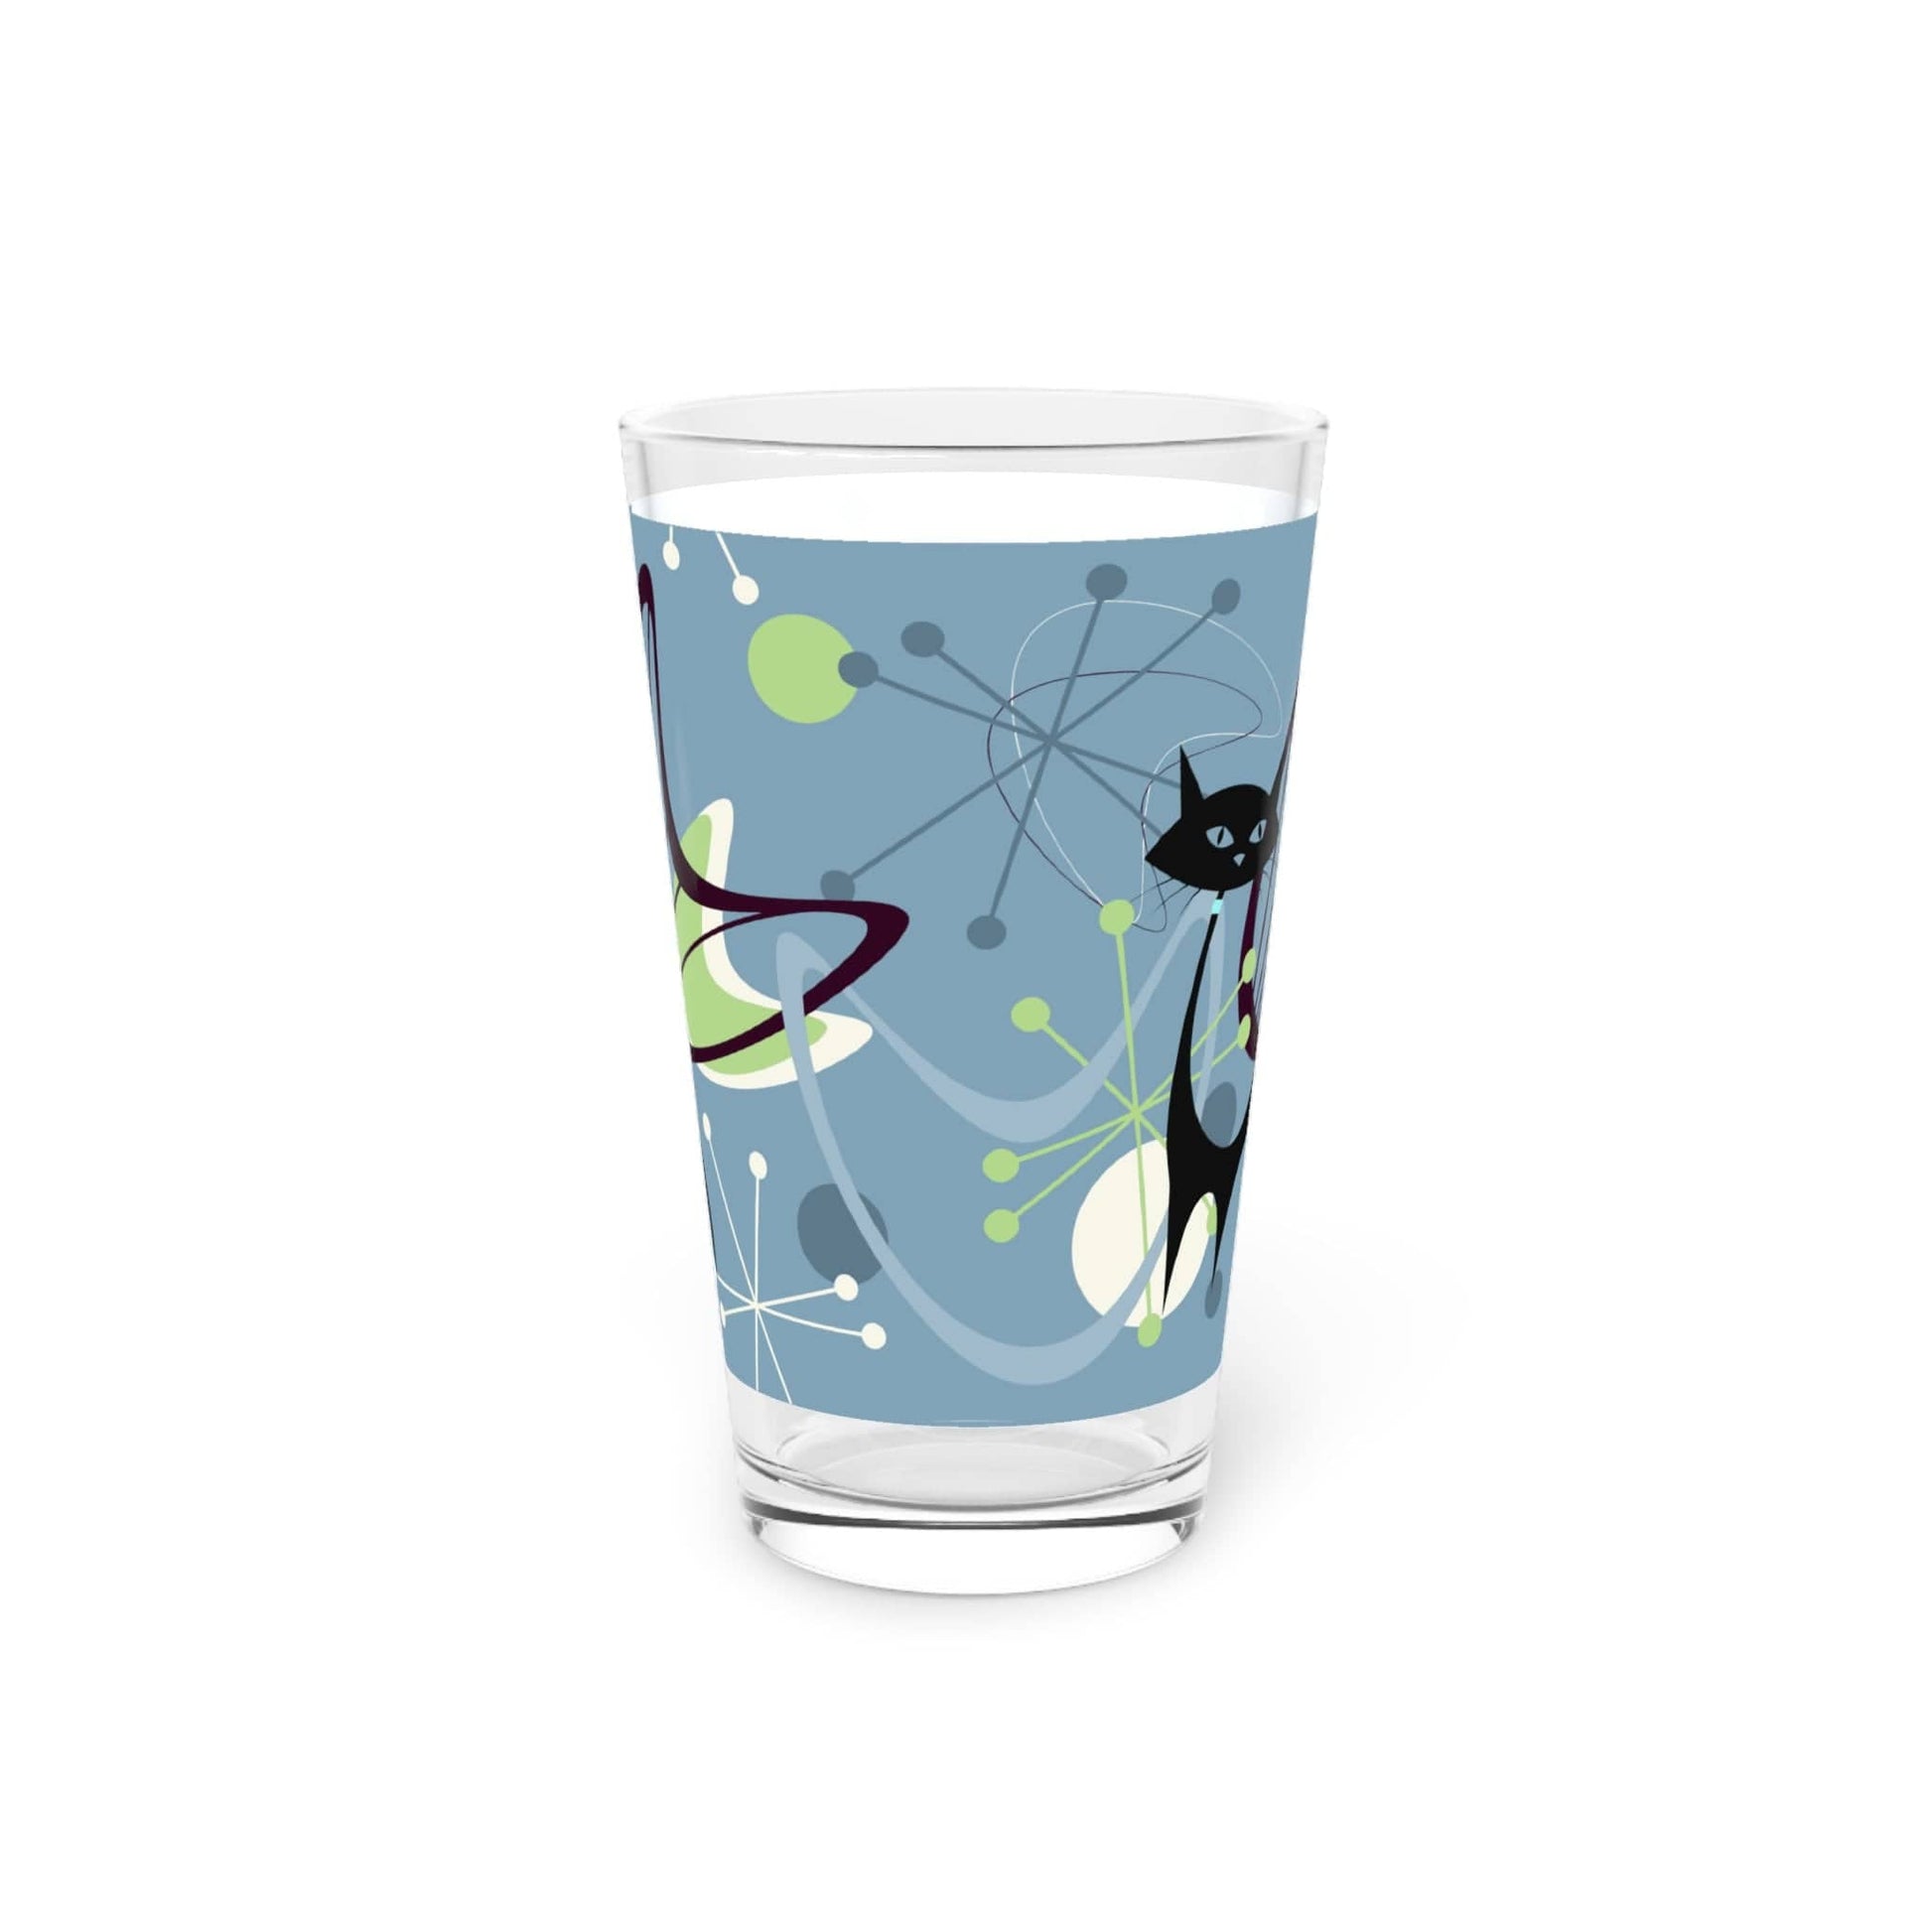 Kate McEnroe New York Atomic Cat Mid Century 16oz Pint Glass, Retro MCM Barware Beer Glasses 13656334988454249416